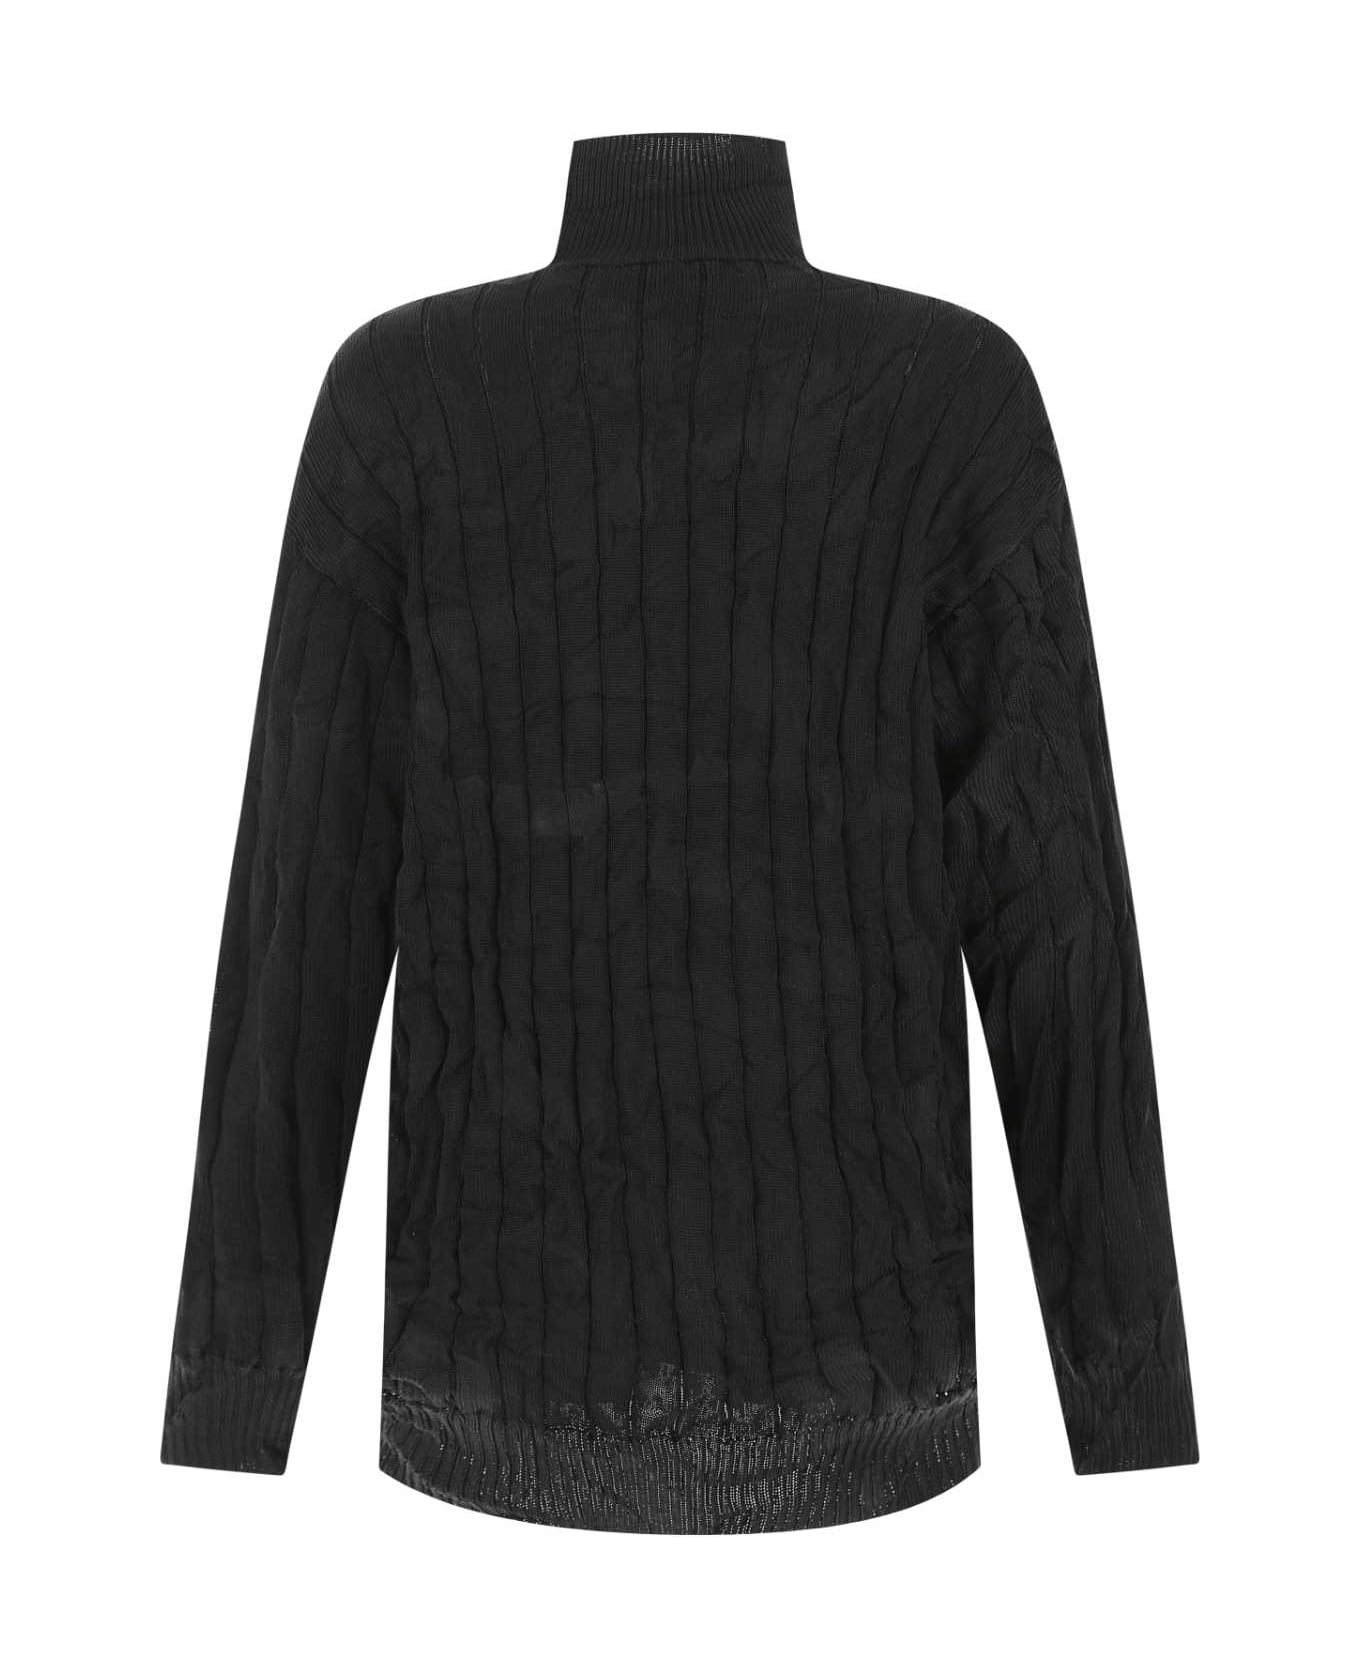 Balenciaga Black Silk Blend Oversize Sweater - 0100